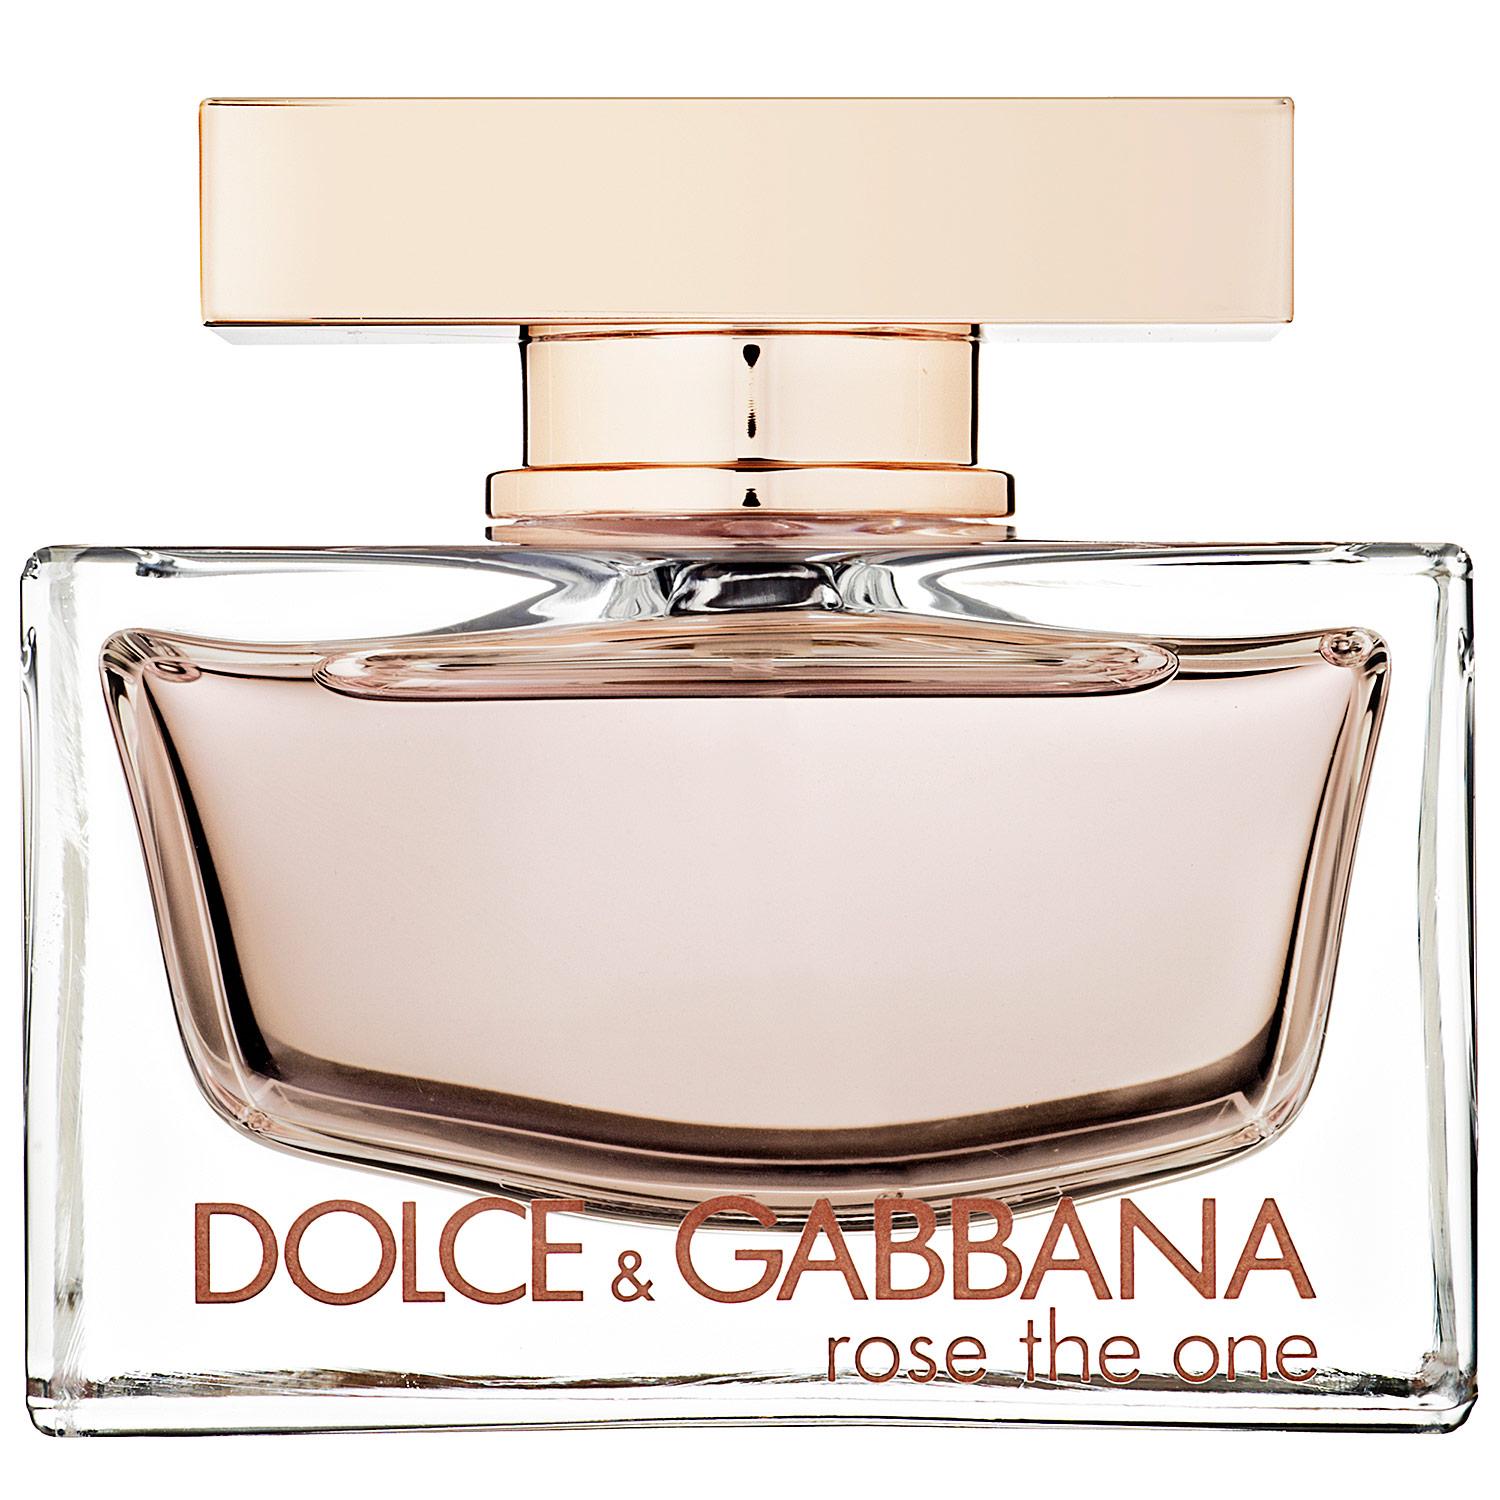 Дольче габбана цена фото. Dolce Gabbana Rose the one 75 ml. Dolce Gabbana the one женские 75 мл. Дольче Габбана Rose the one. Духи Dolce Gabbana Rose.